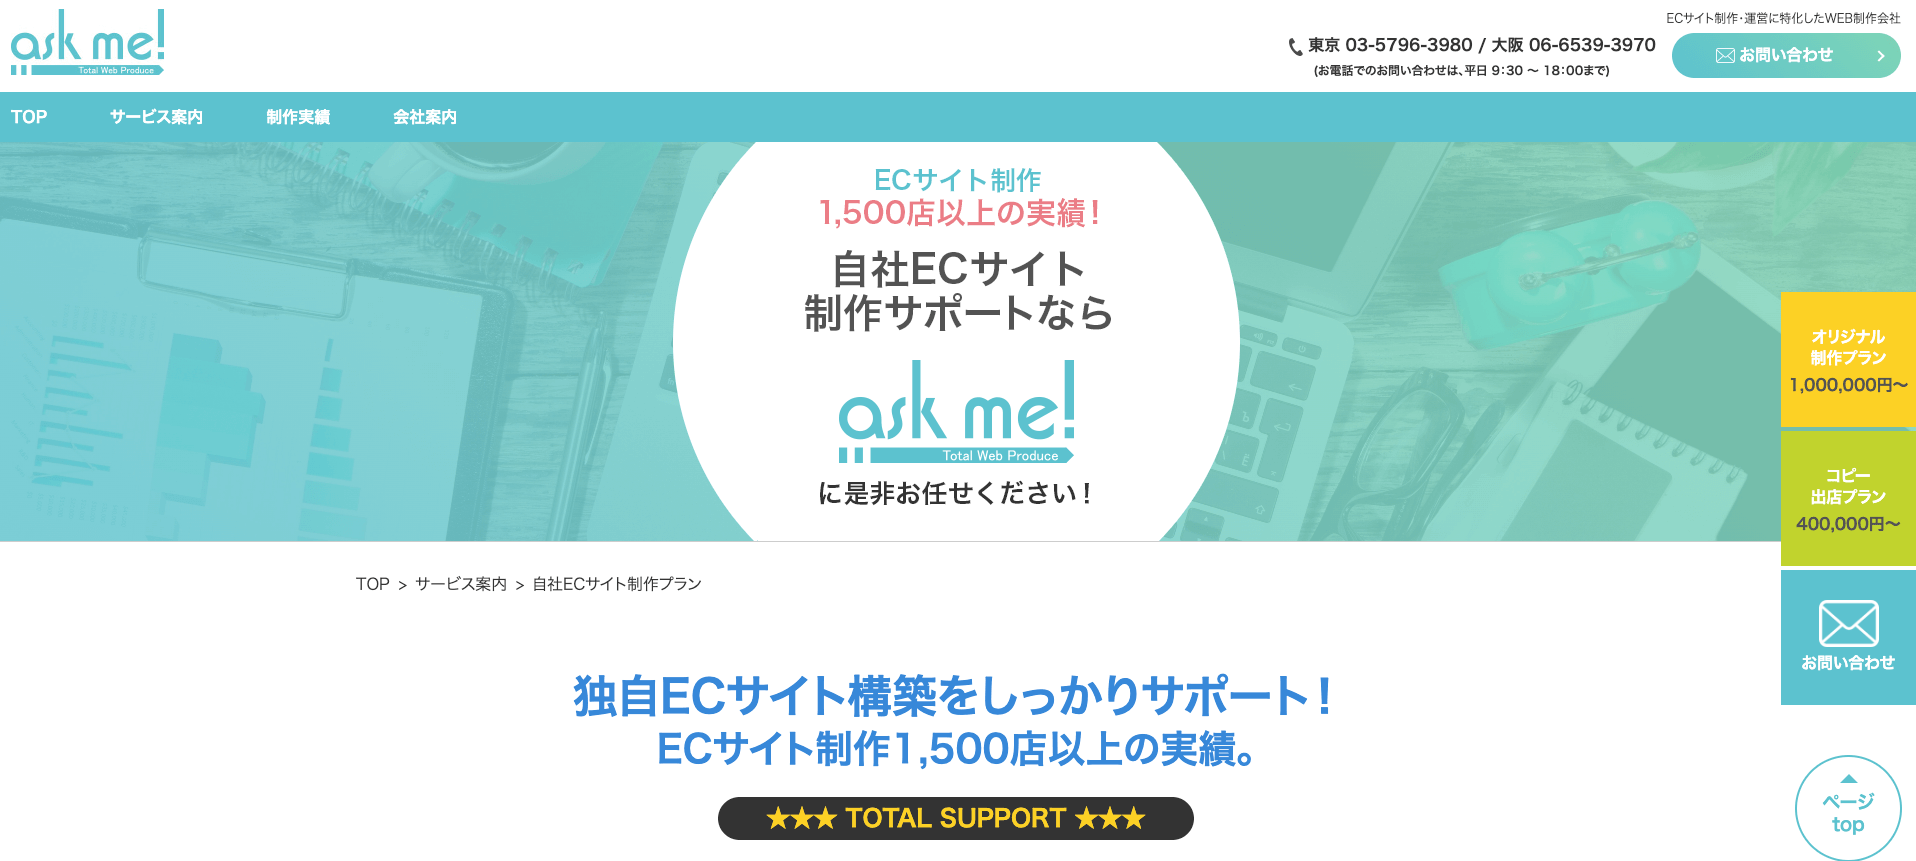 ask me!の公式サイト